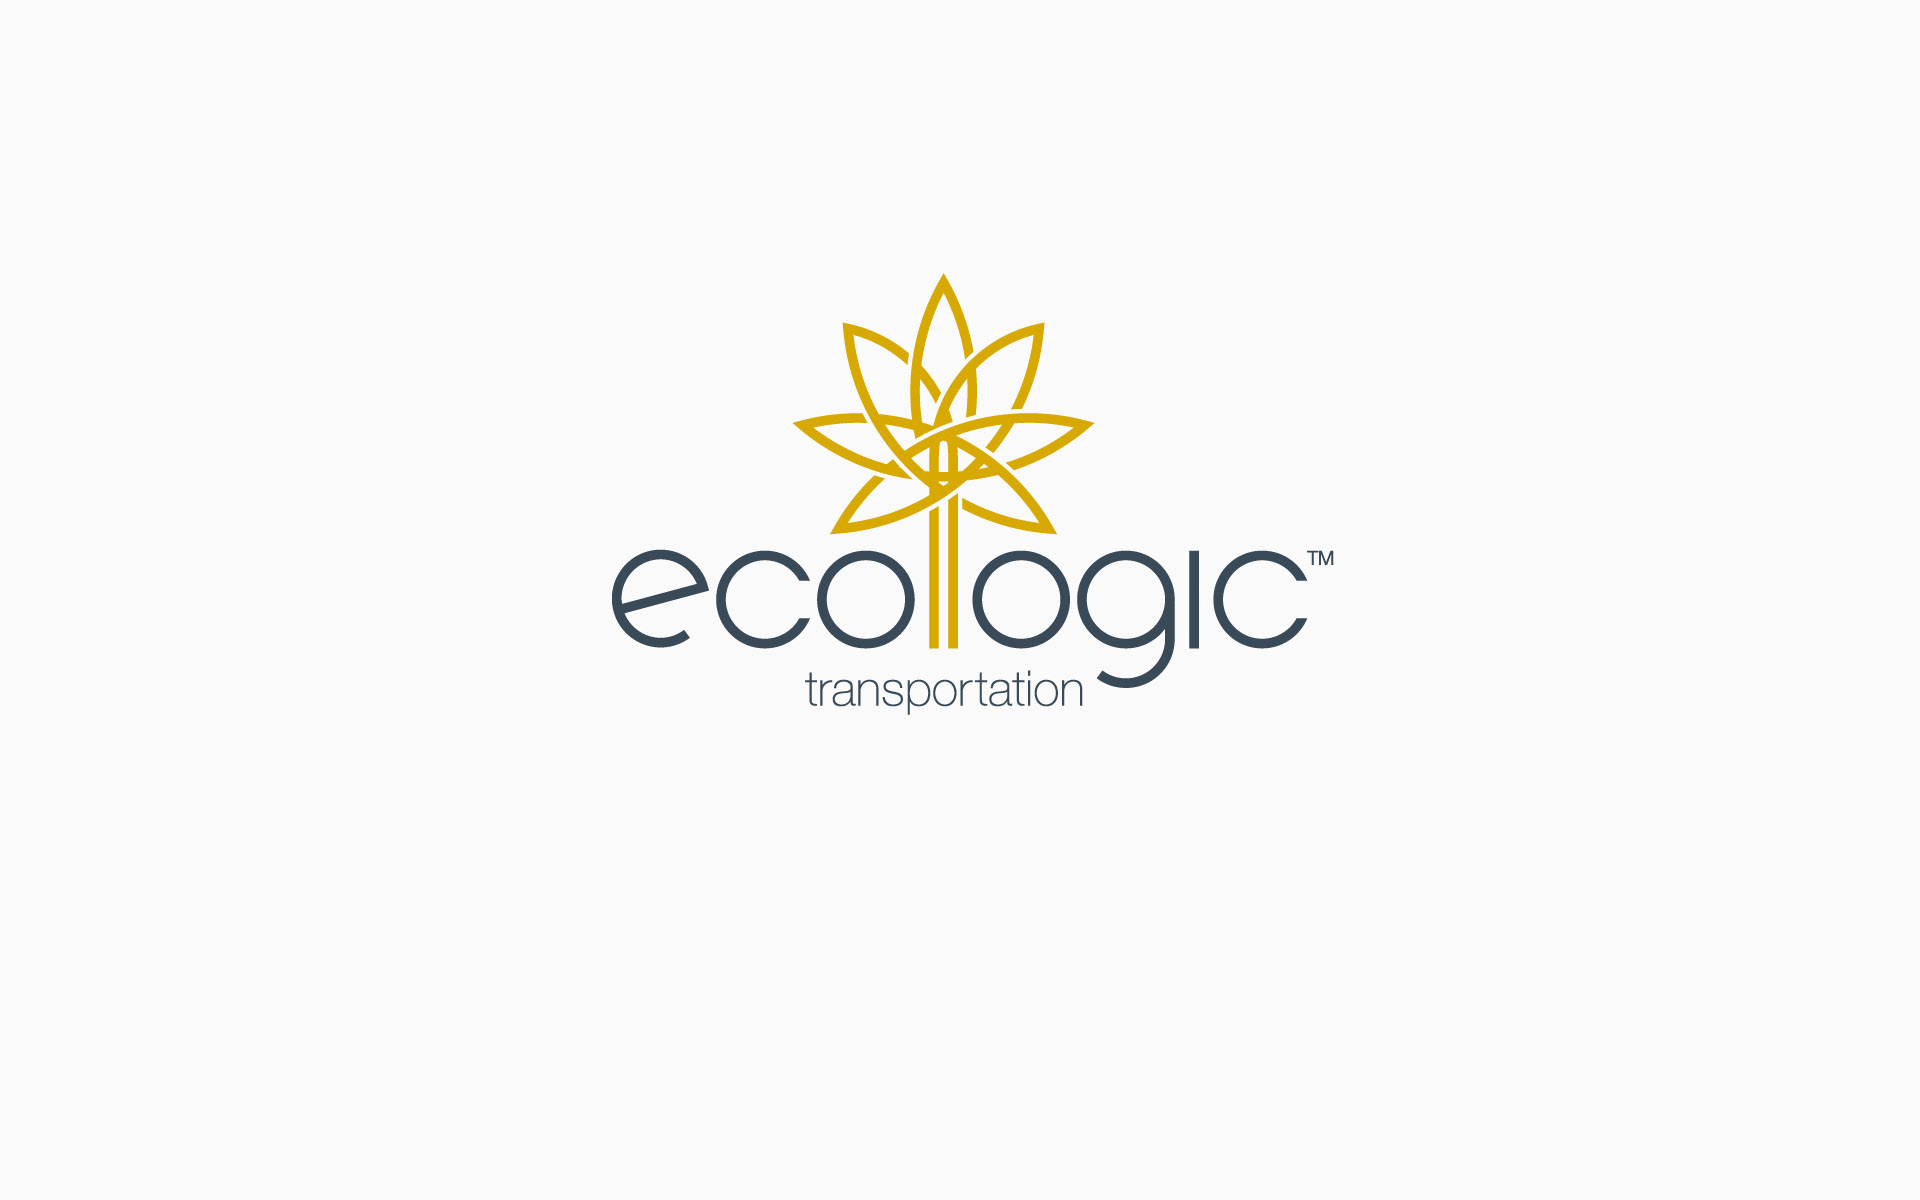 Ecologic Transportation Brand Identity